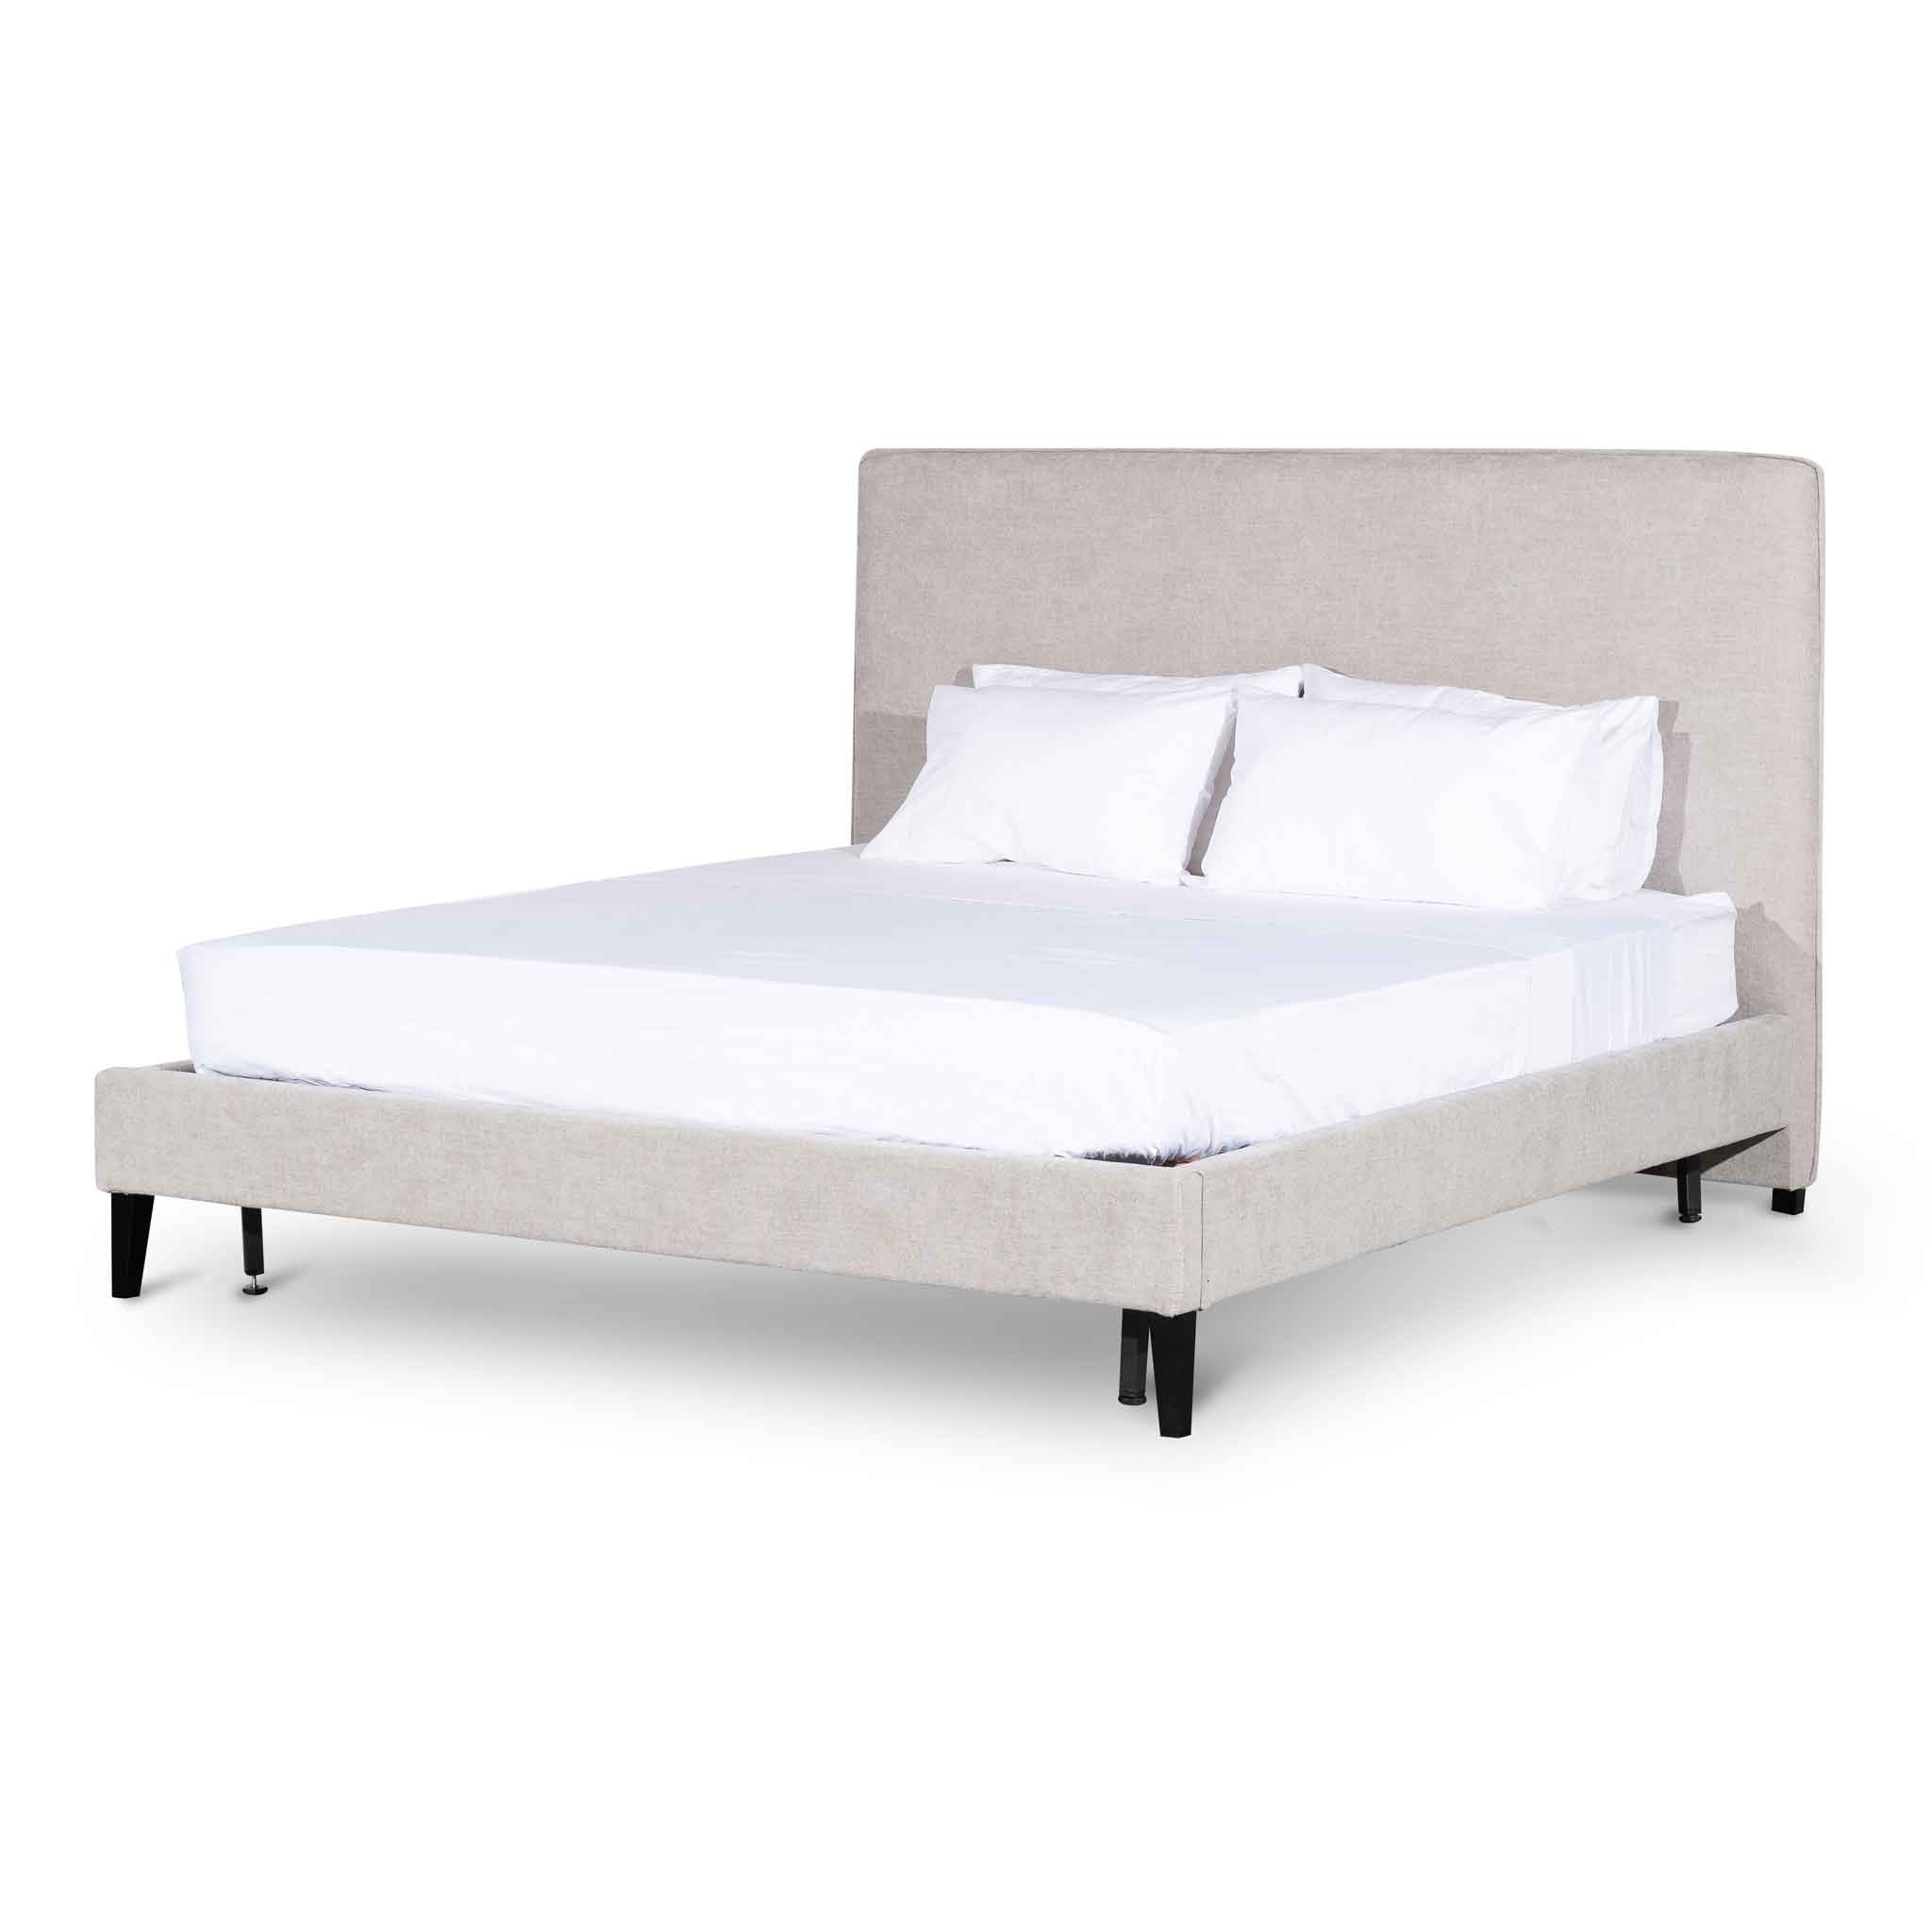 Hailey King Bed Frame - Comfort Grey